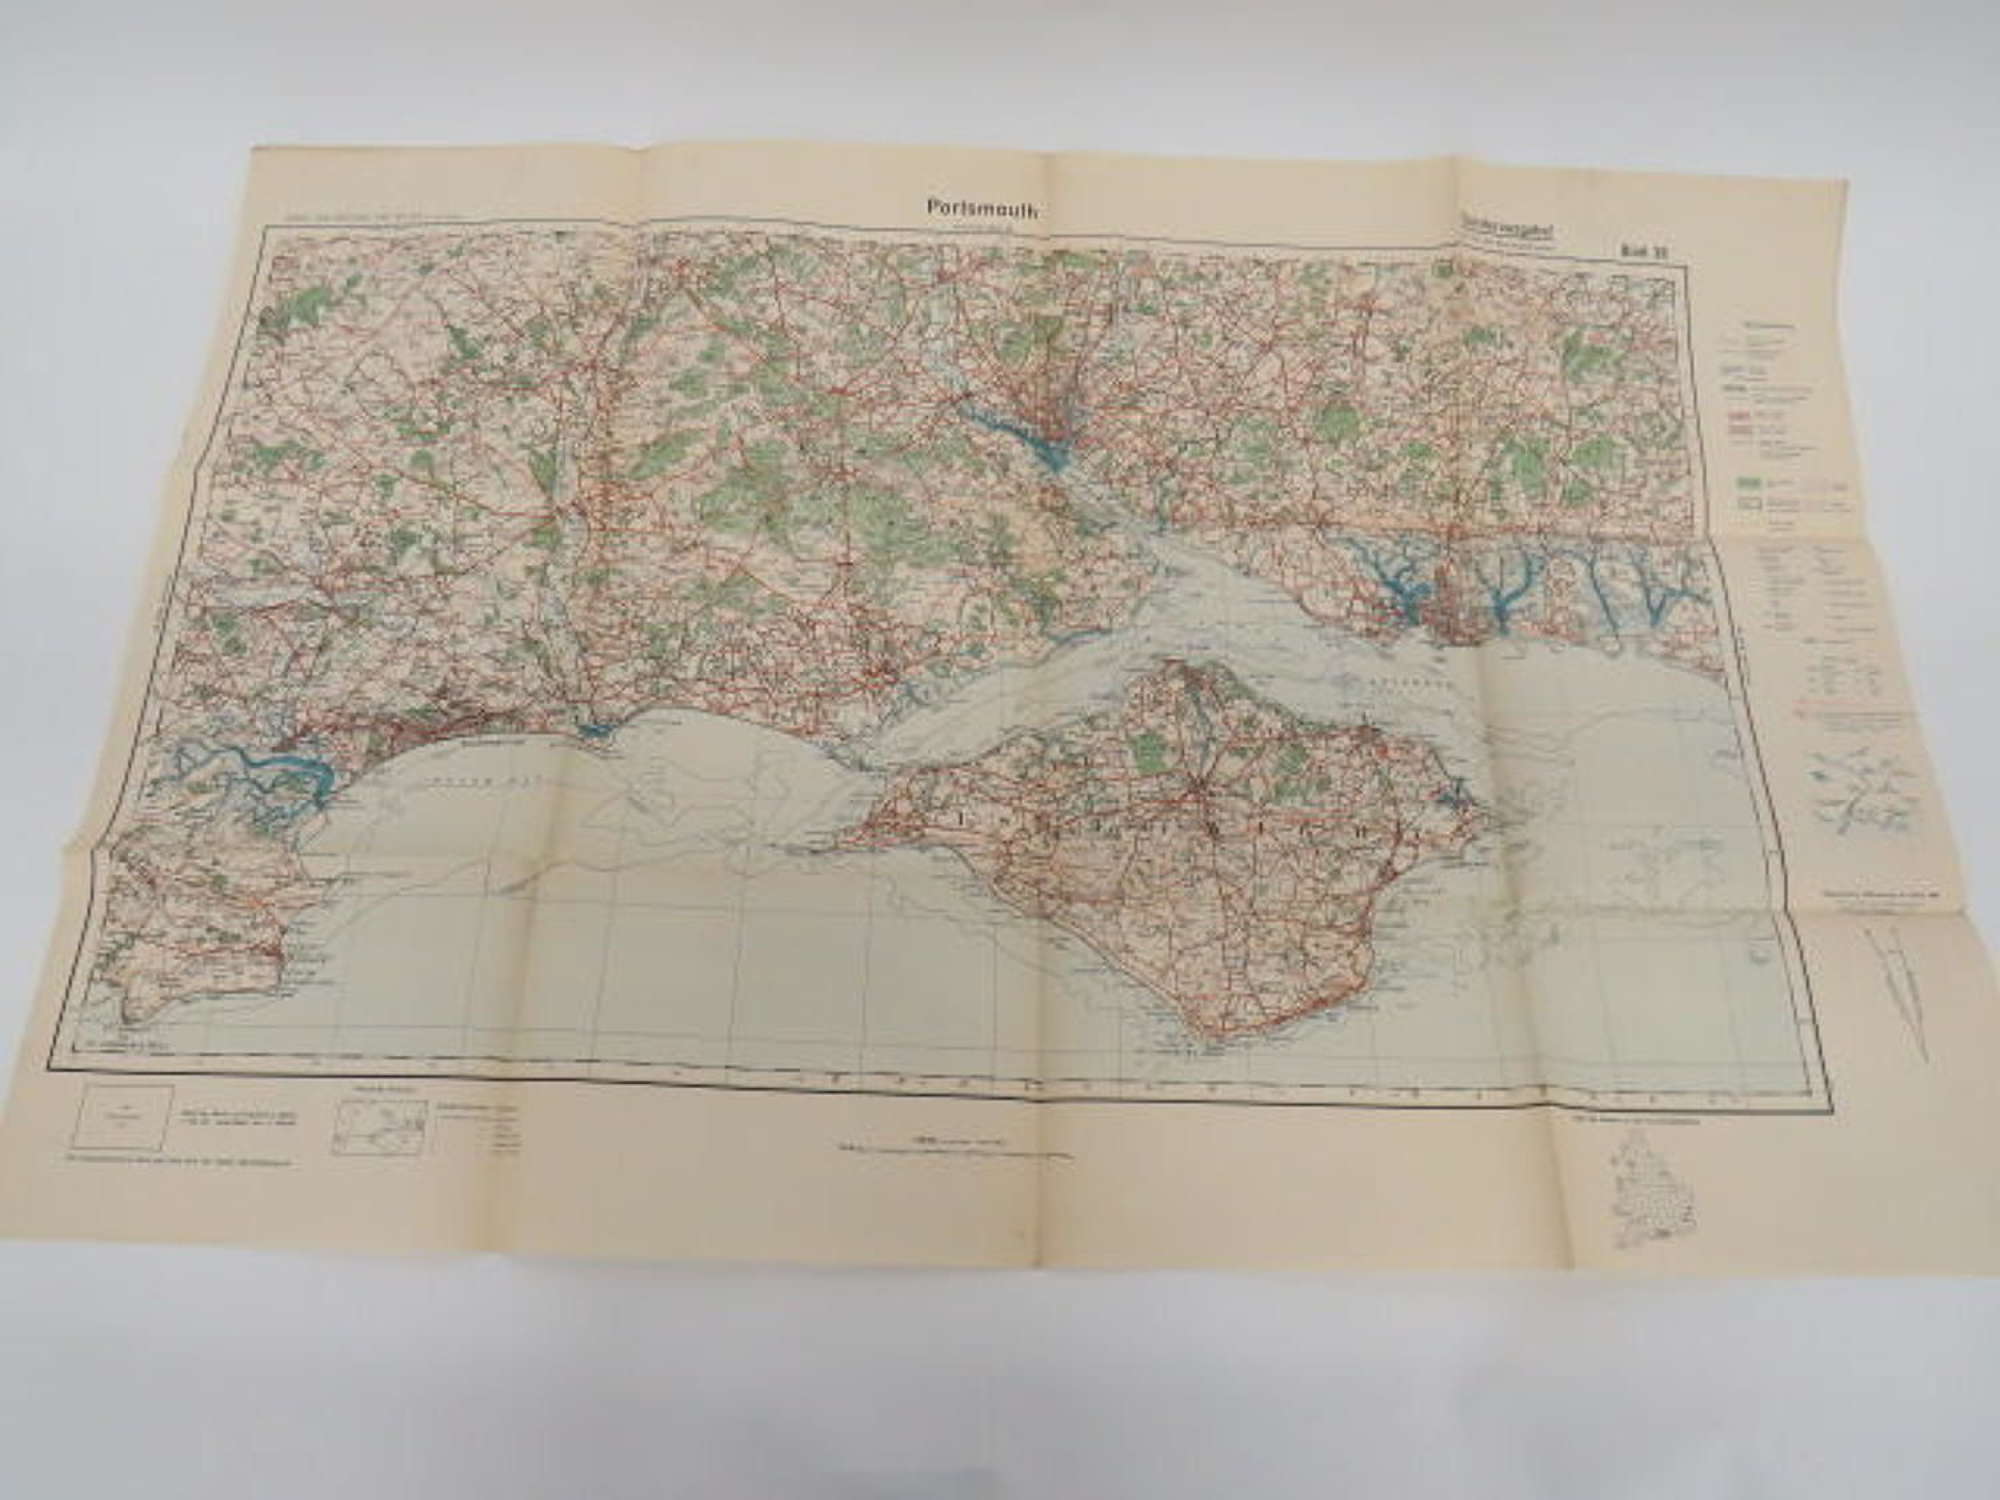 WW 2 German Invasion Map of Portsmouth